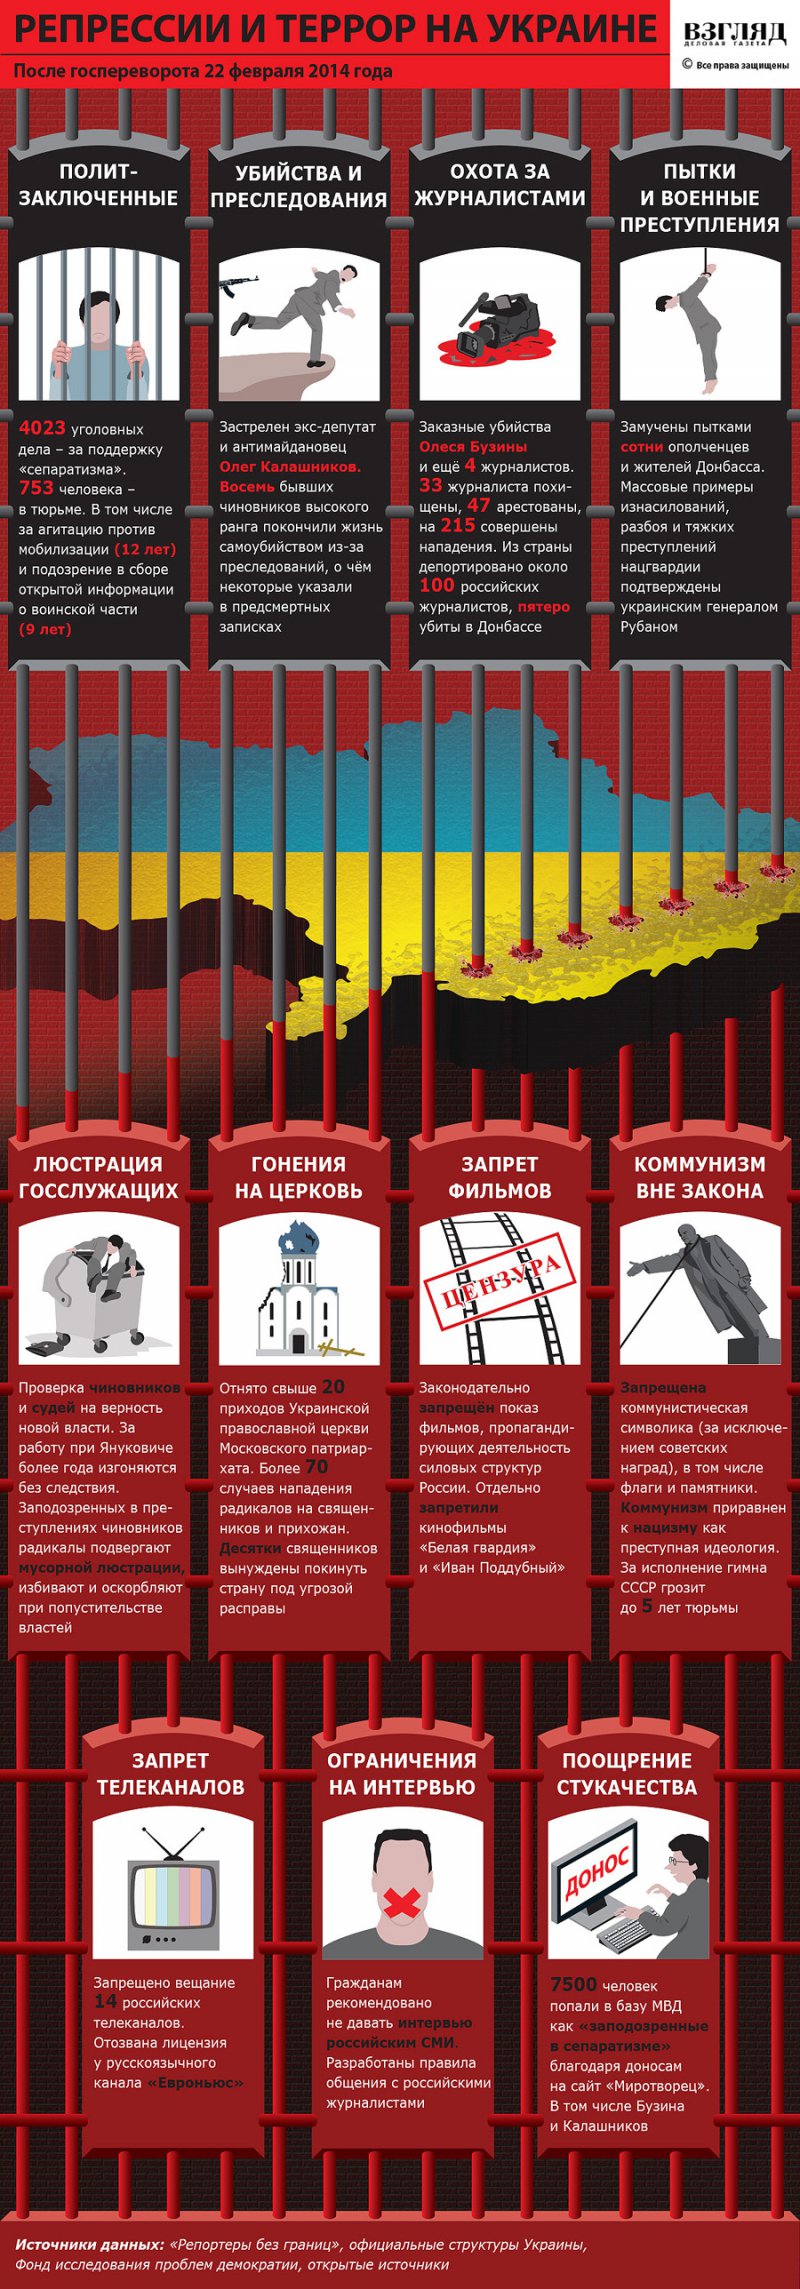 Репрессии и террор на Украине